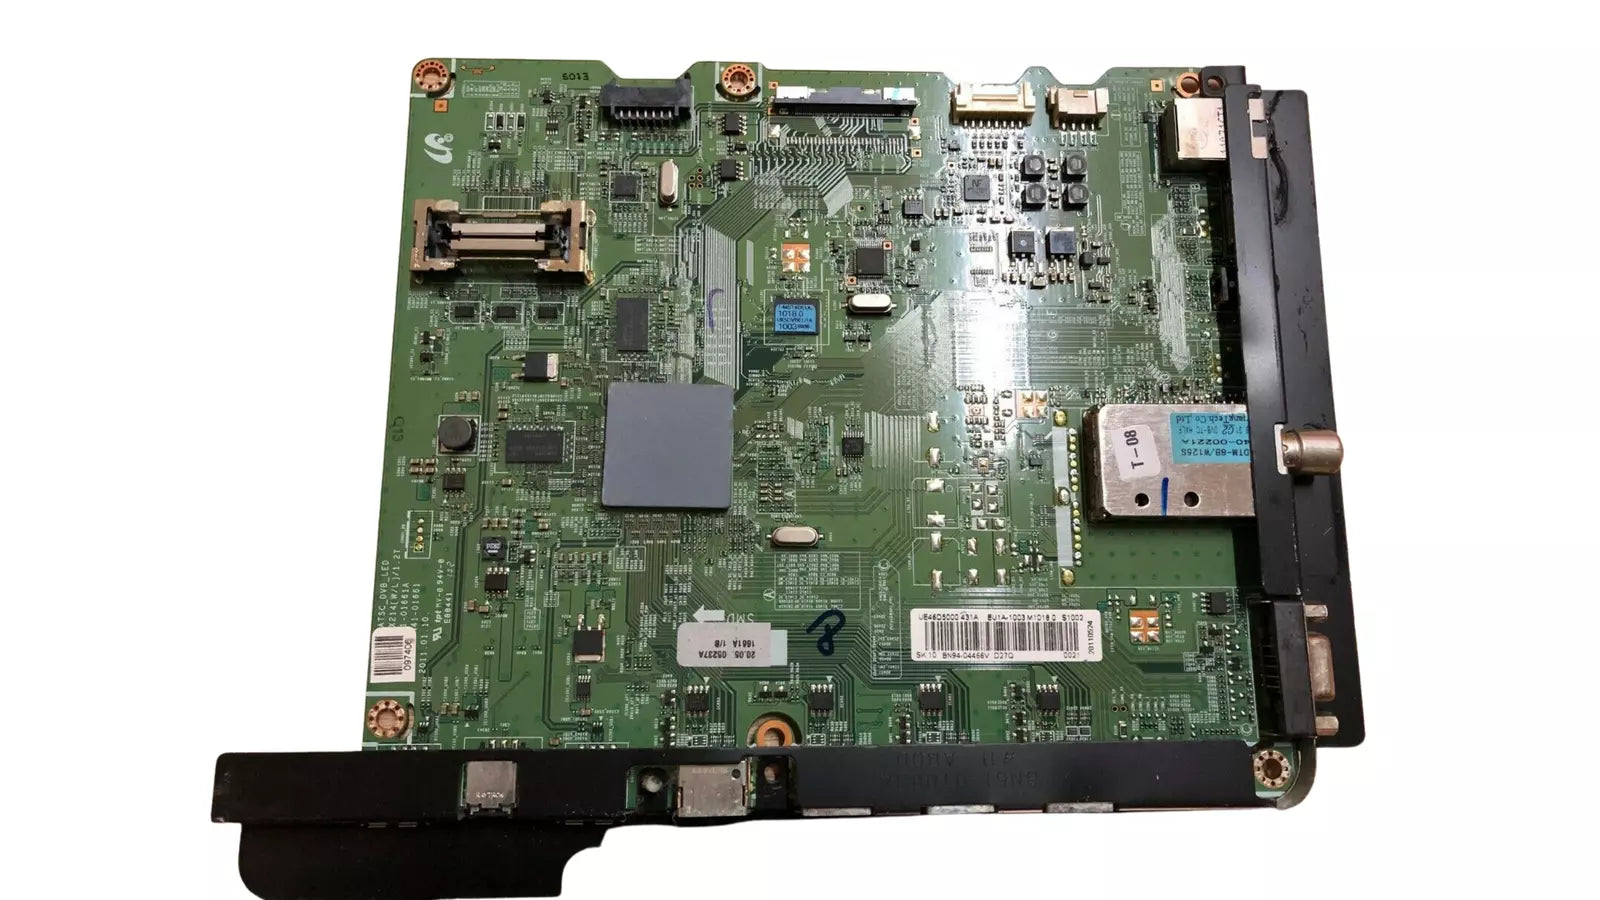 BN41-01661A Mainboard from Samsung UE46D5005